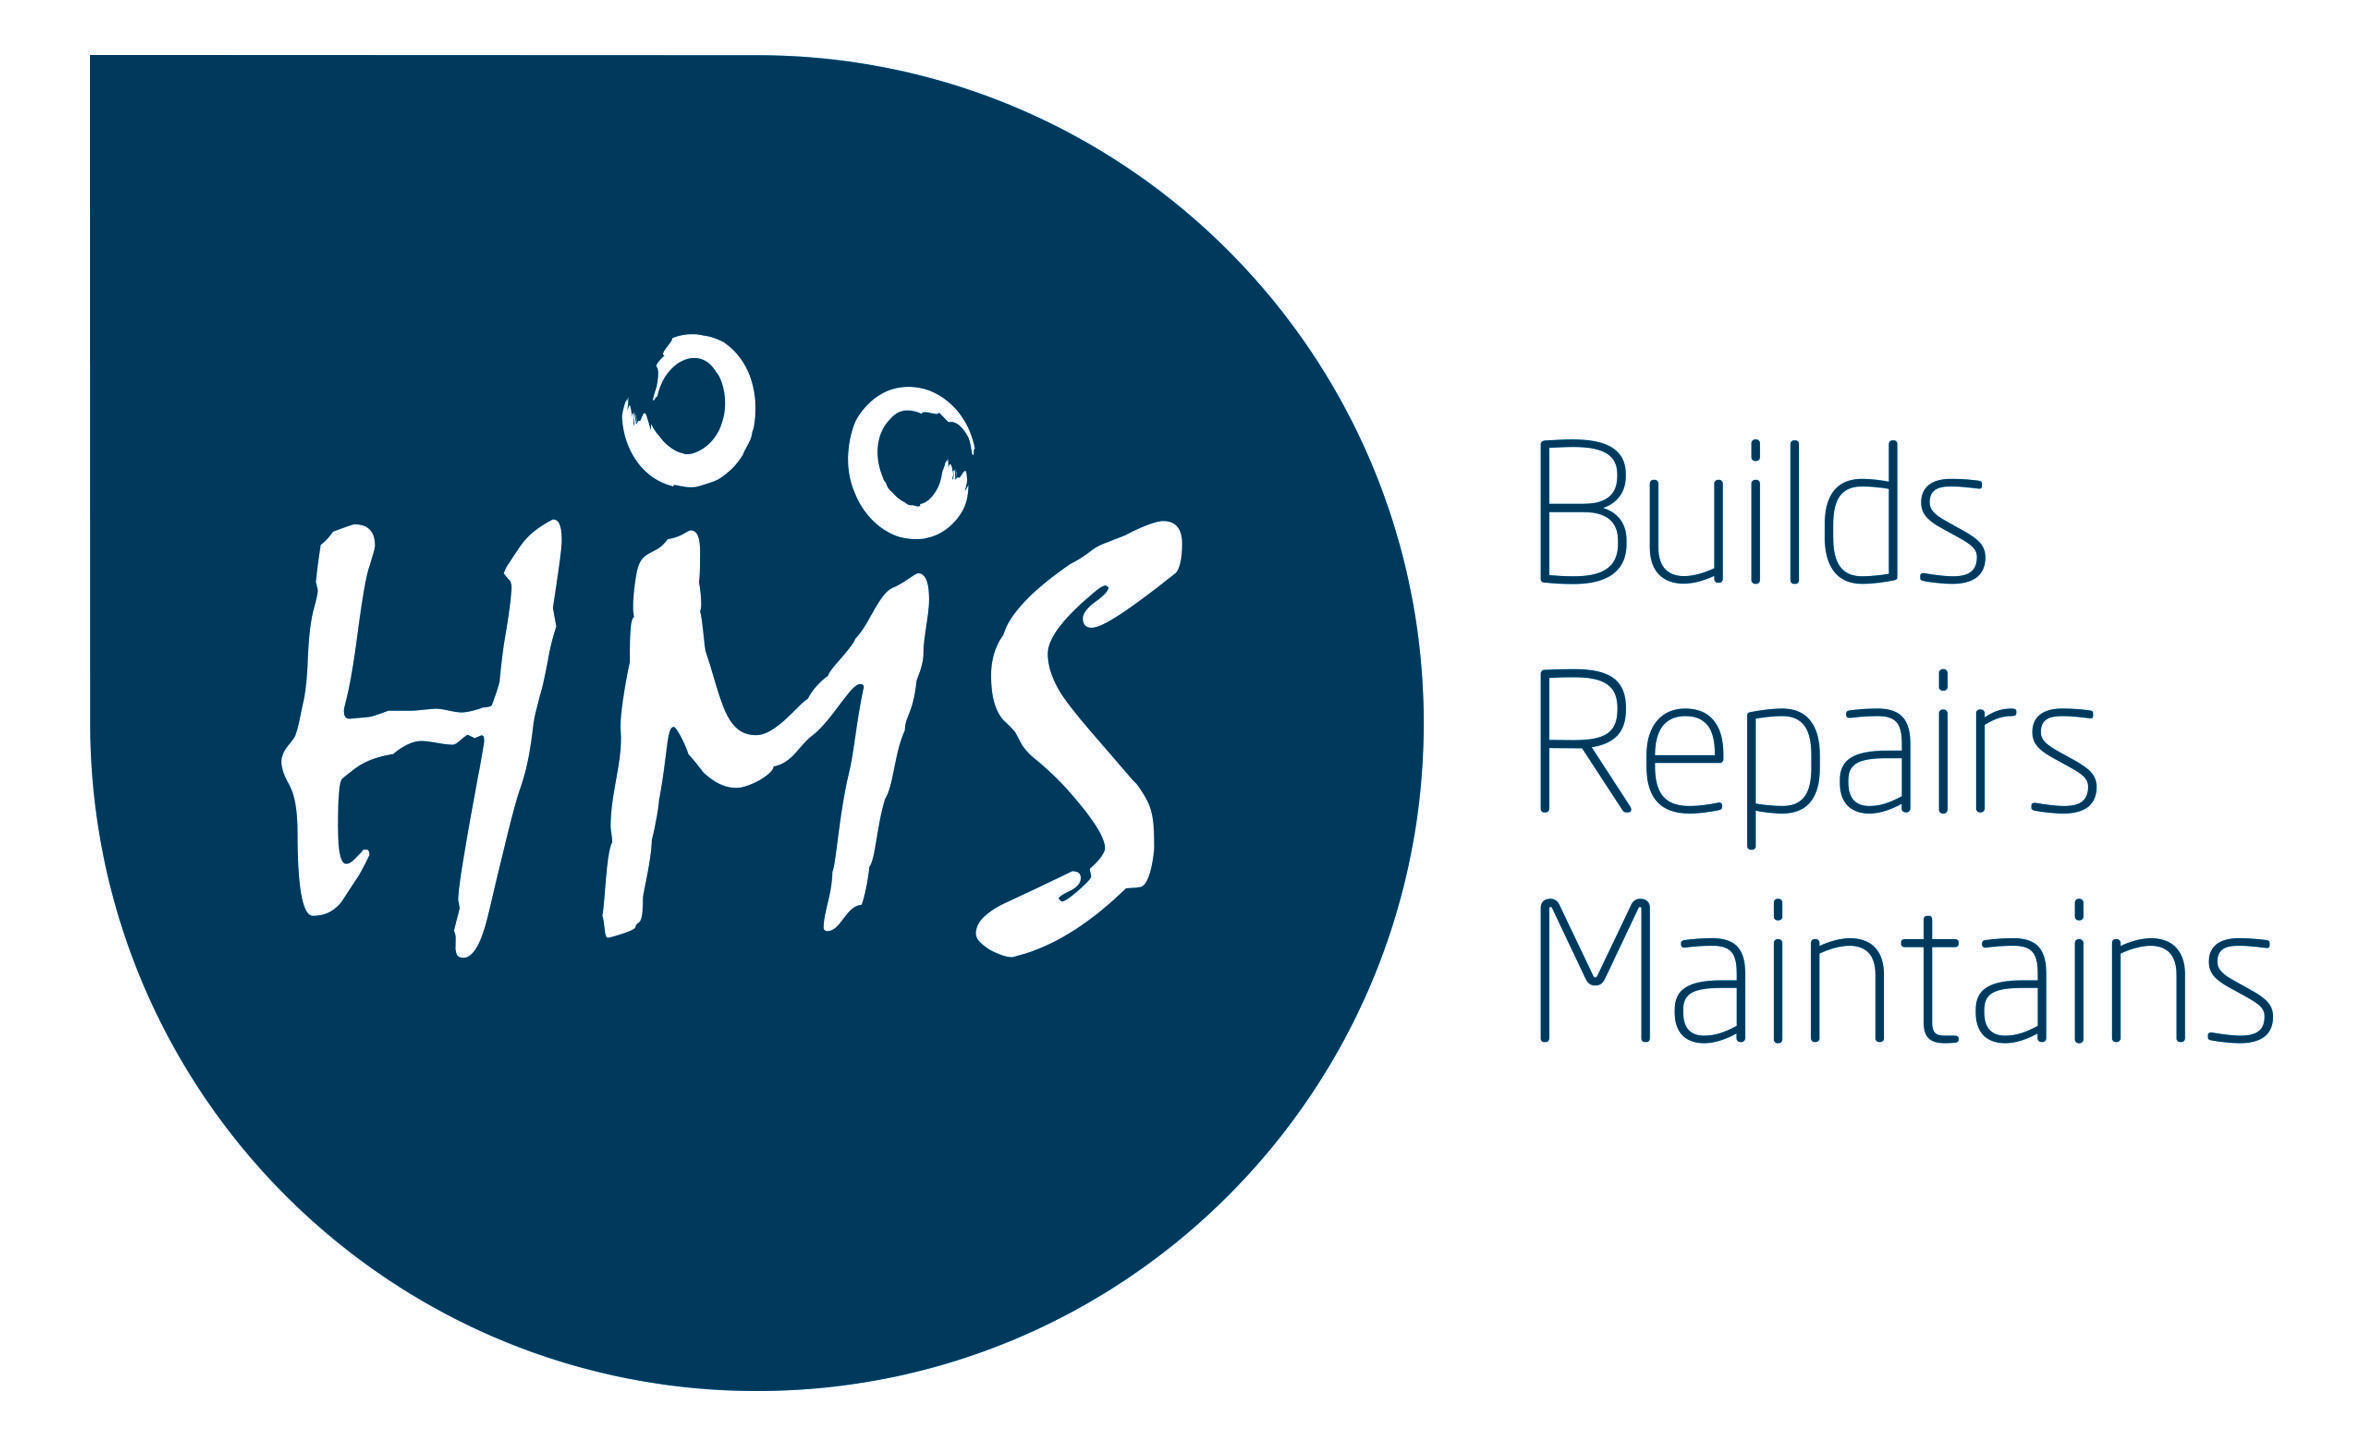 Google Main Logo - HMS MAIN LOGO - Procurement for Housing